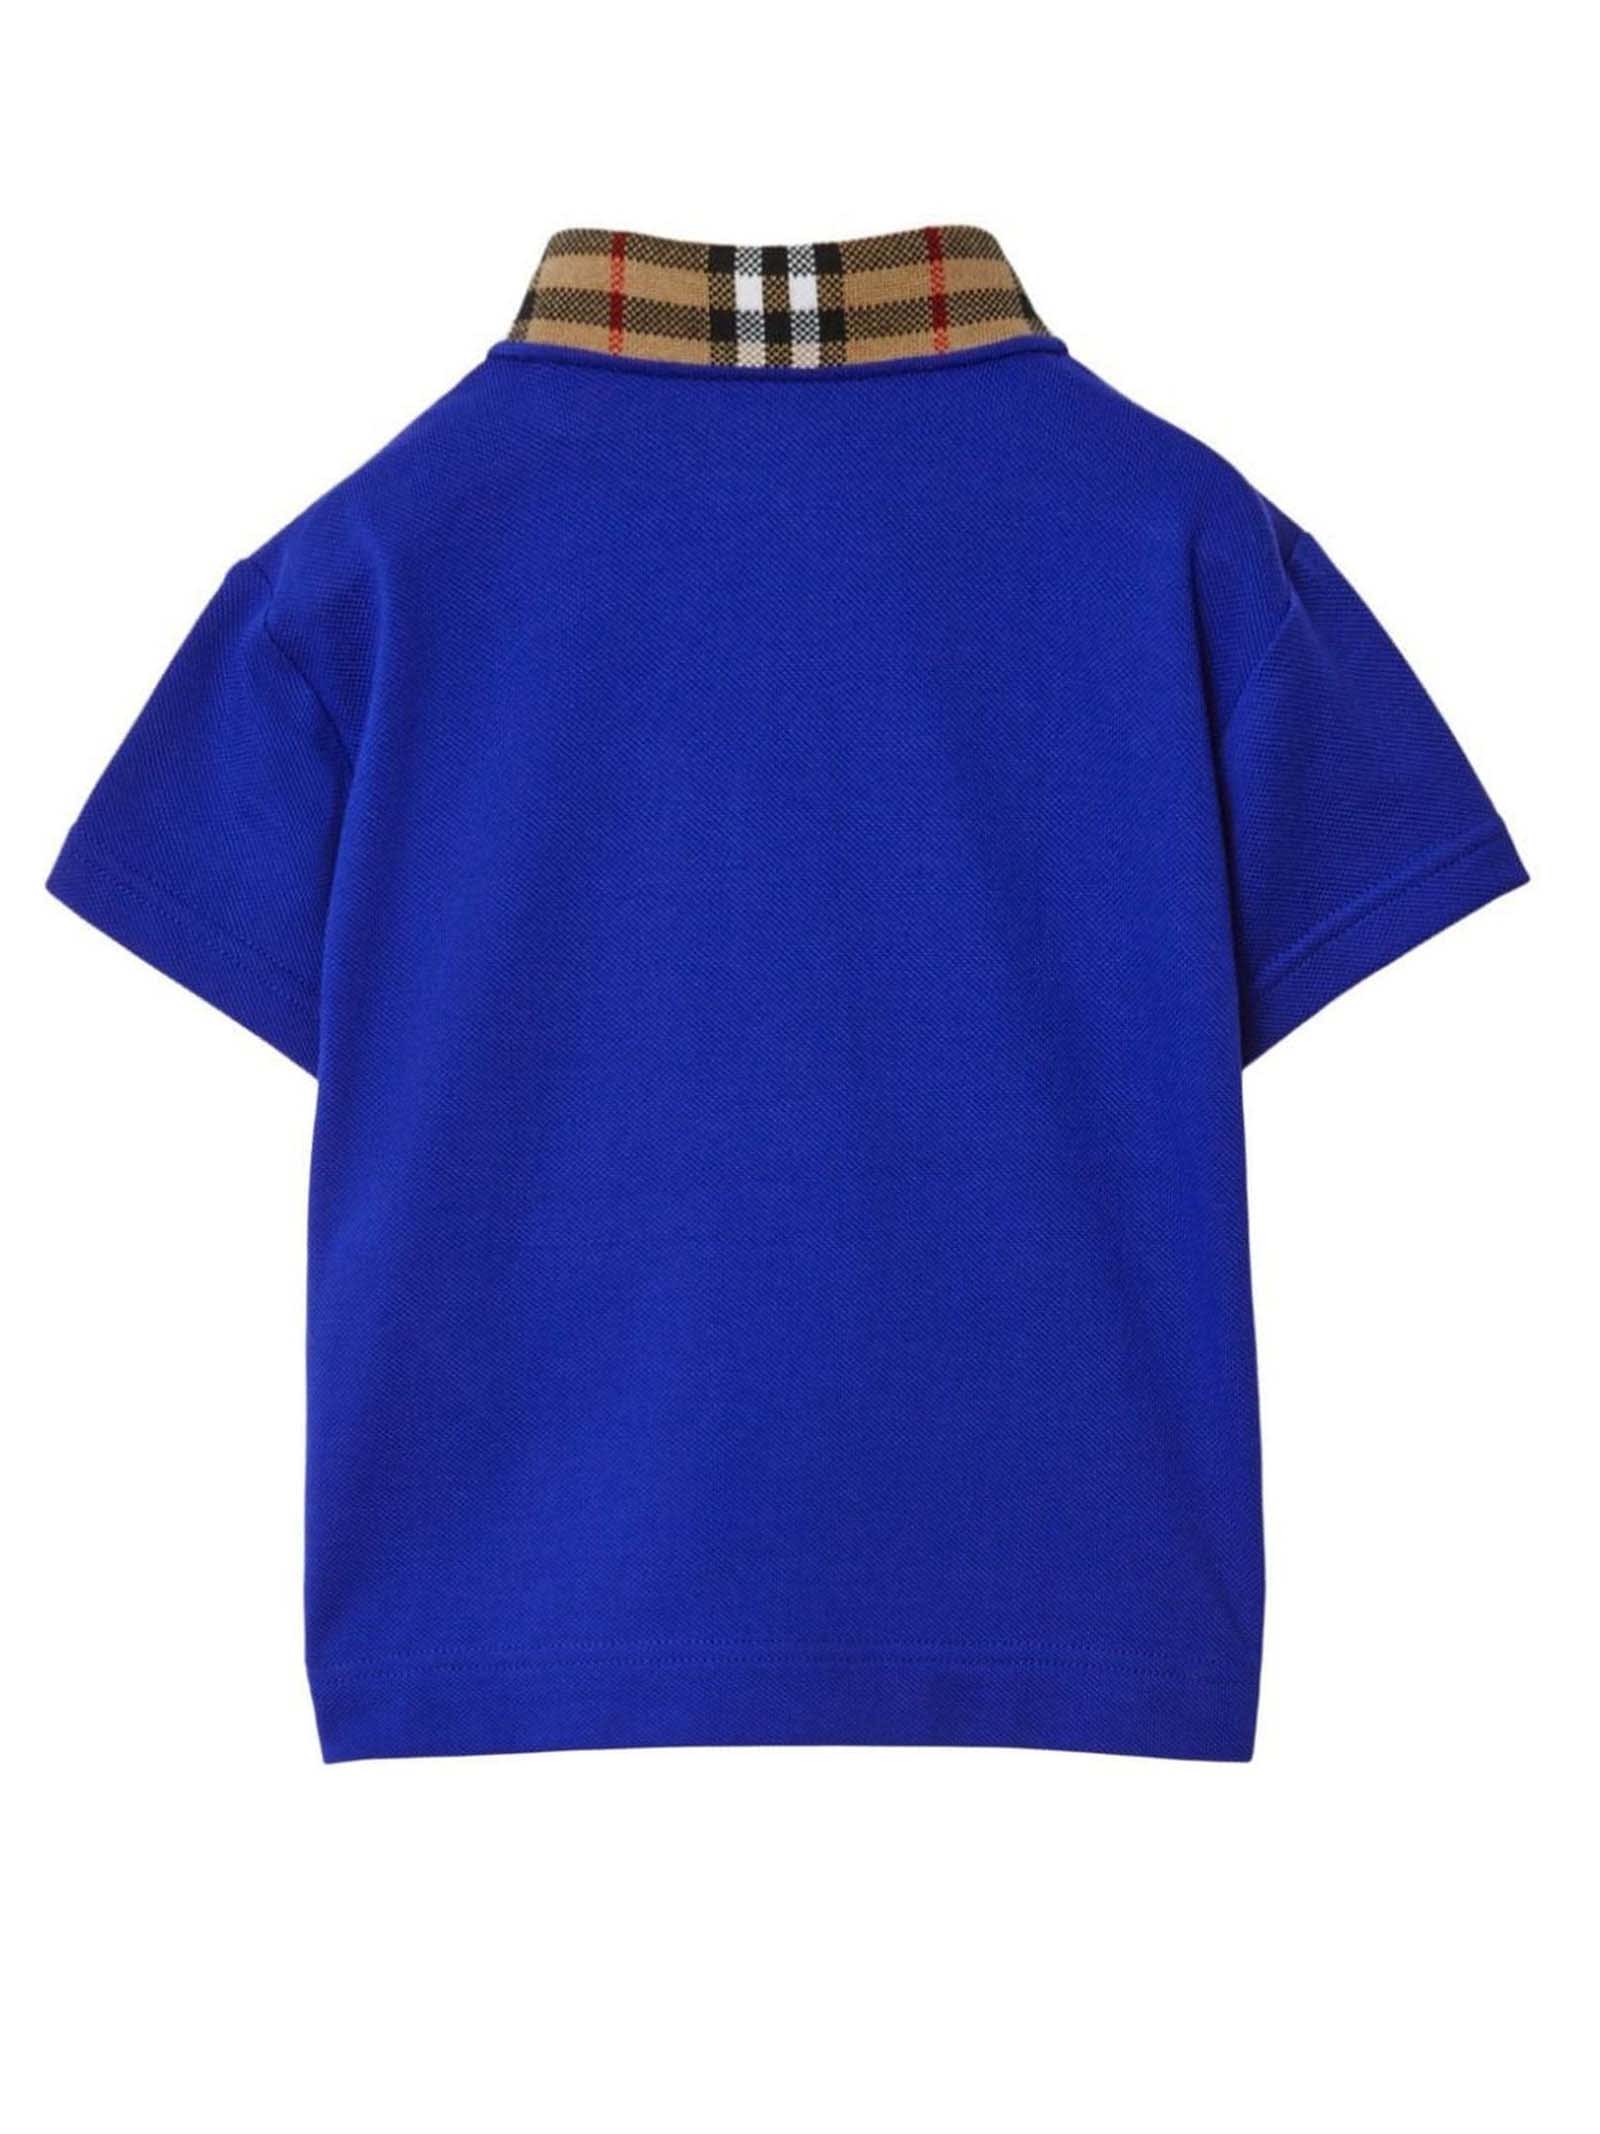 Shop Burberry Blue Cotton Polo Shirt